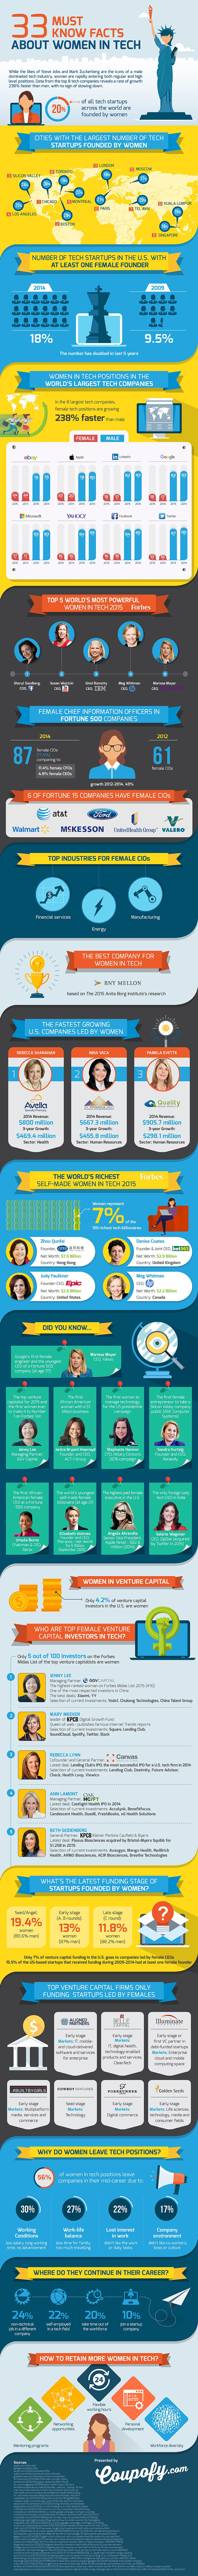 women-in-tech-infographic.jpg